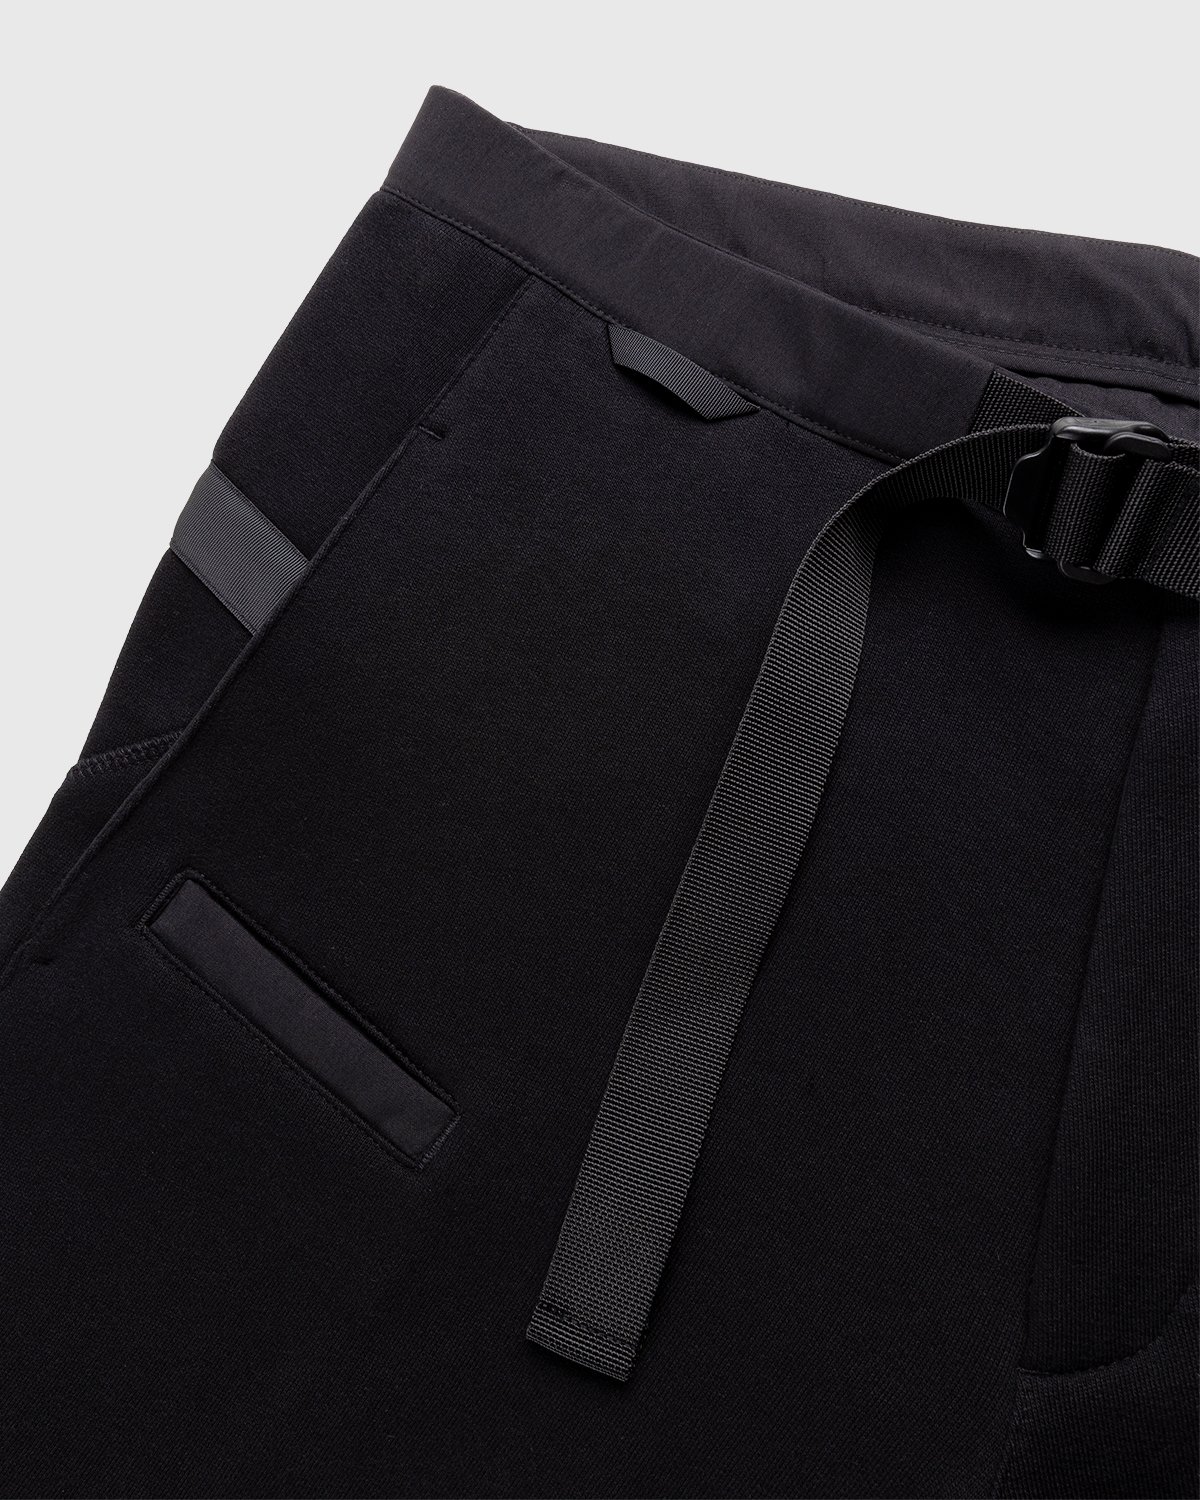 ACRONYM - P39-PR Pants Black - Clothing - Black - Image 6